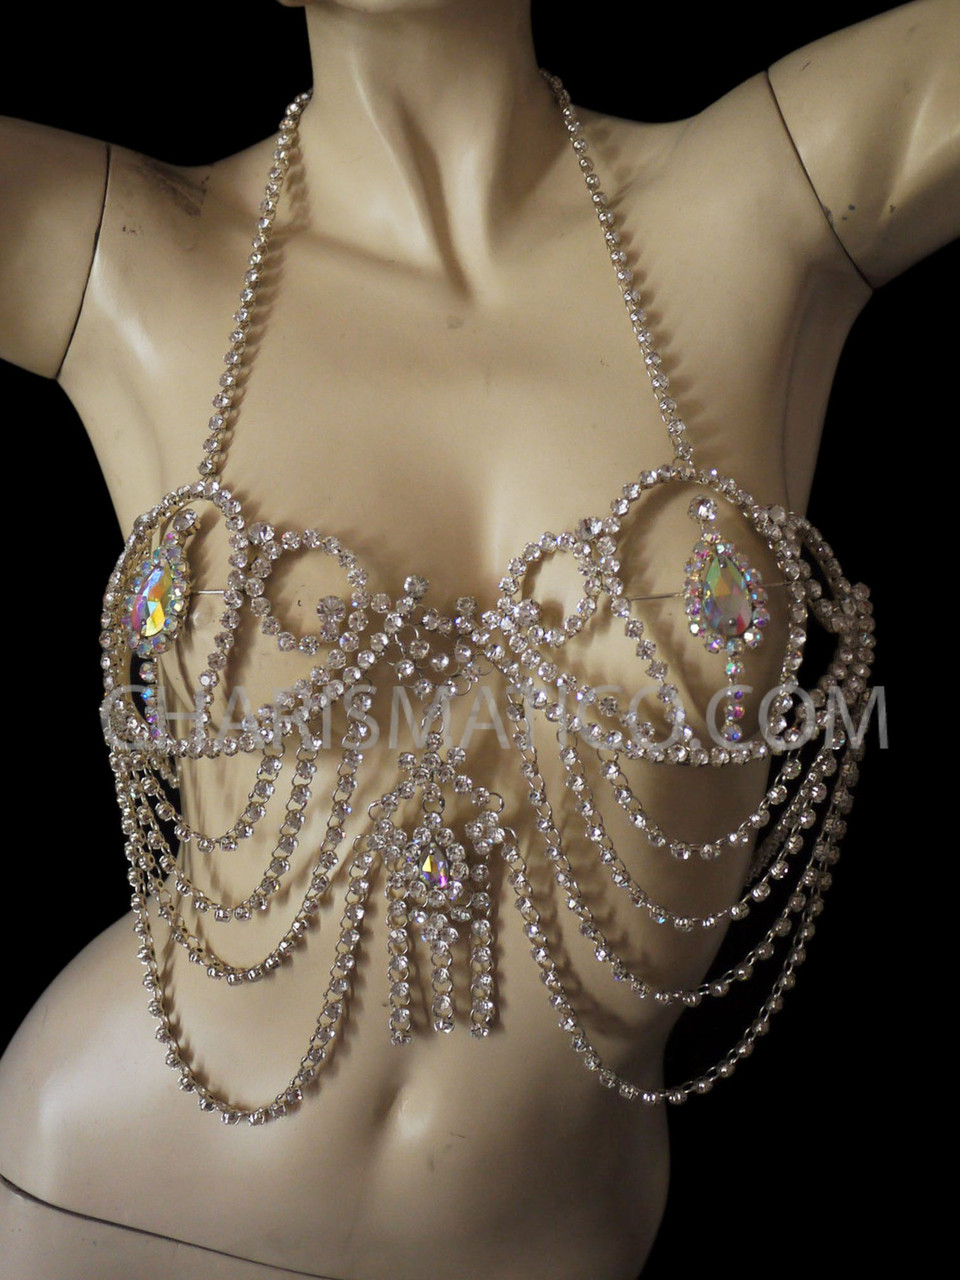 Iridescent Crystal Burlesque Body Rhinestone Showgirl'S Bra And